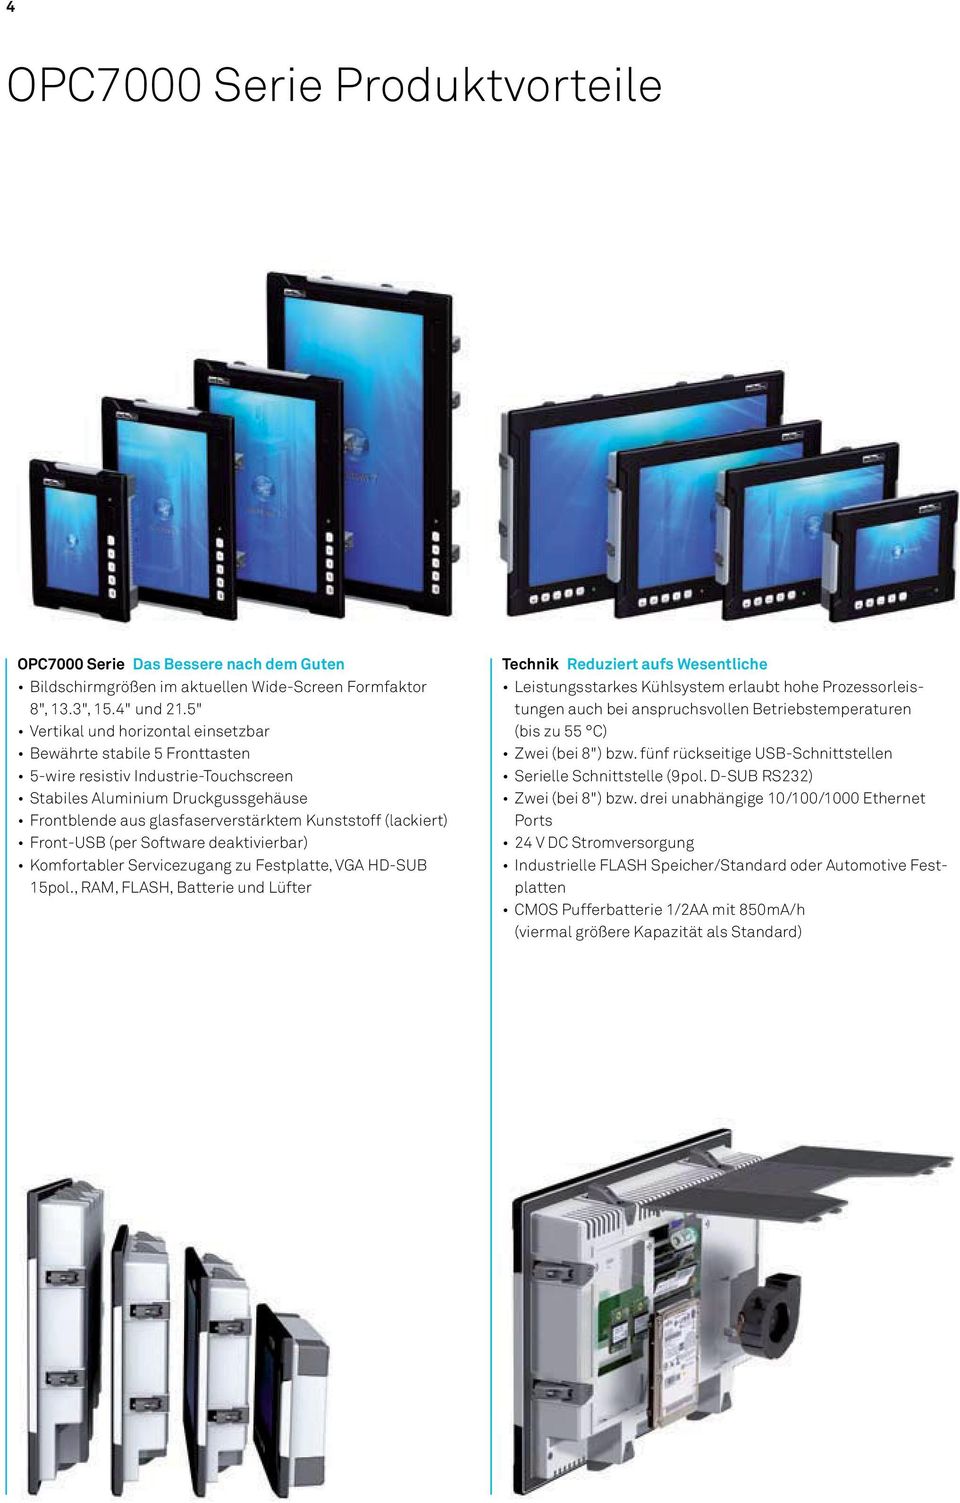 (lackiert) Front-USB (per Software deaktivierbar) Komfortabler Servicezugang zu Festplatte, VGA HD-SUB 15pol.